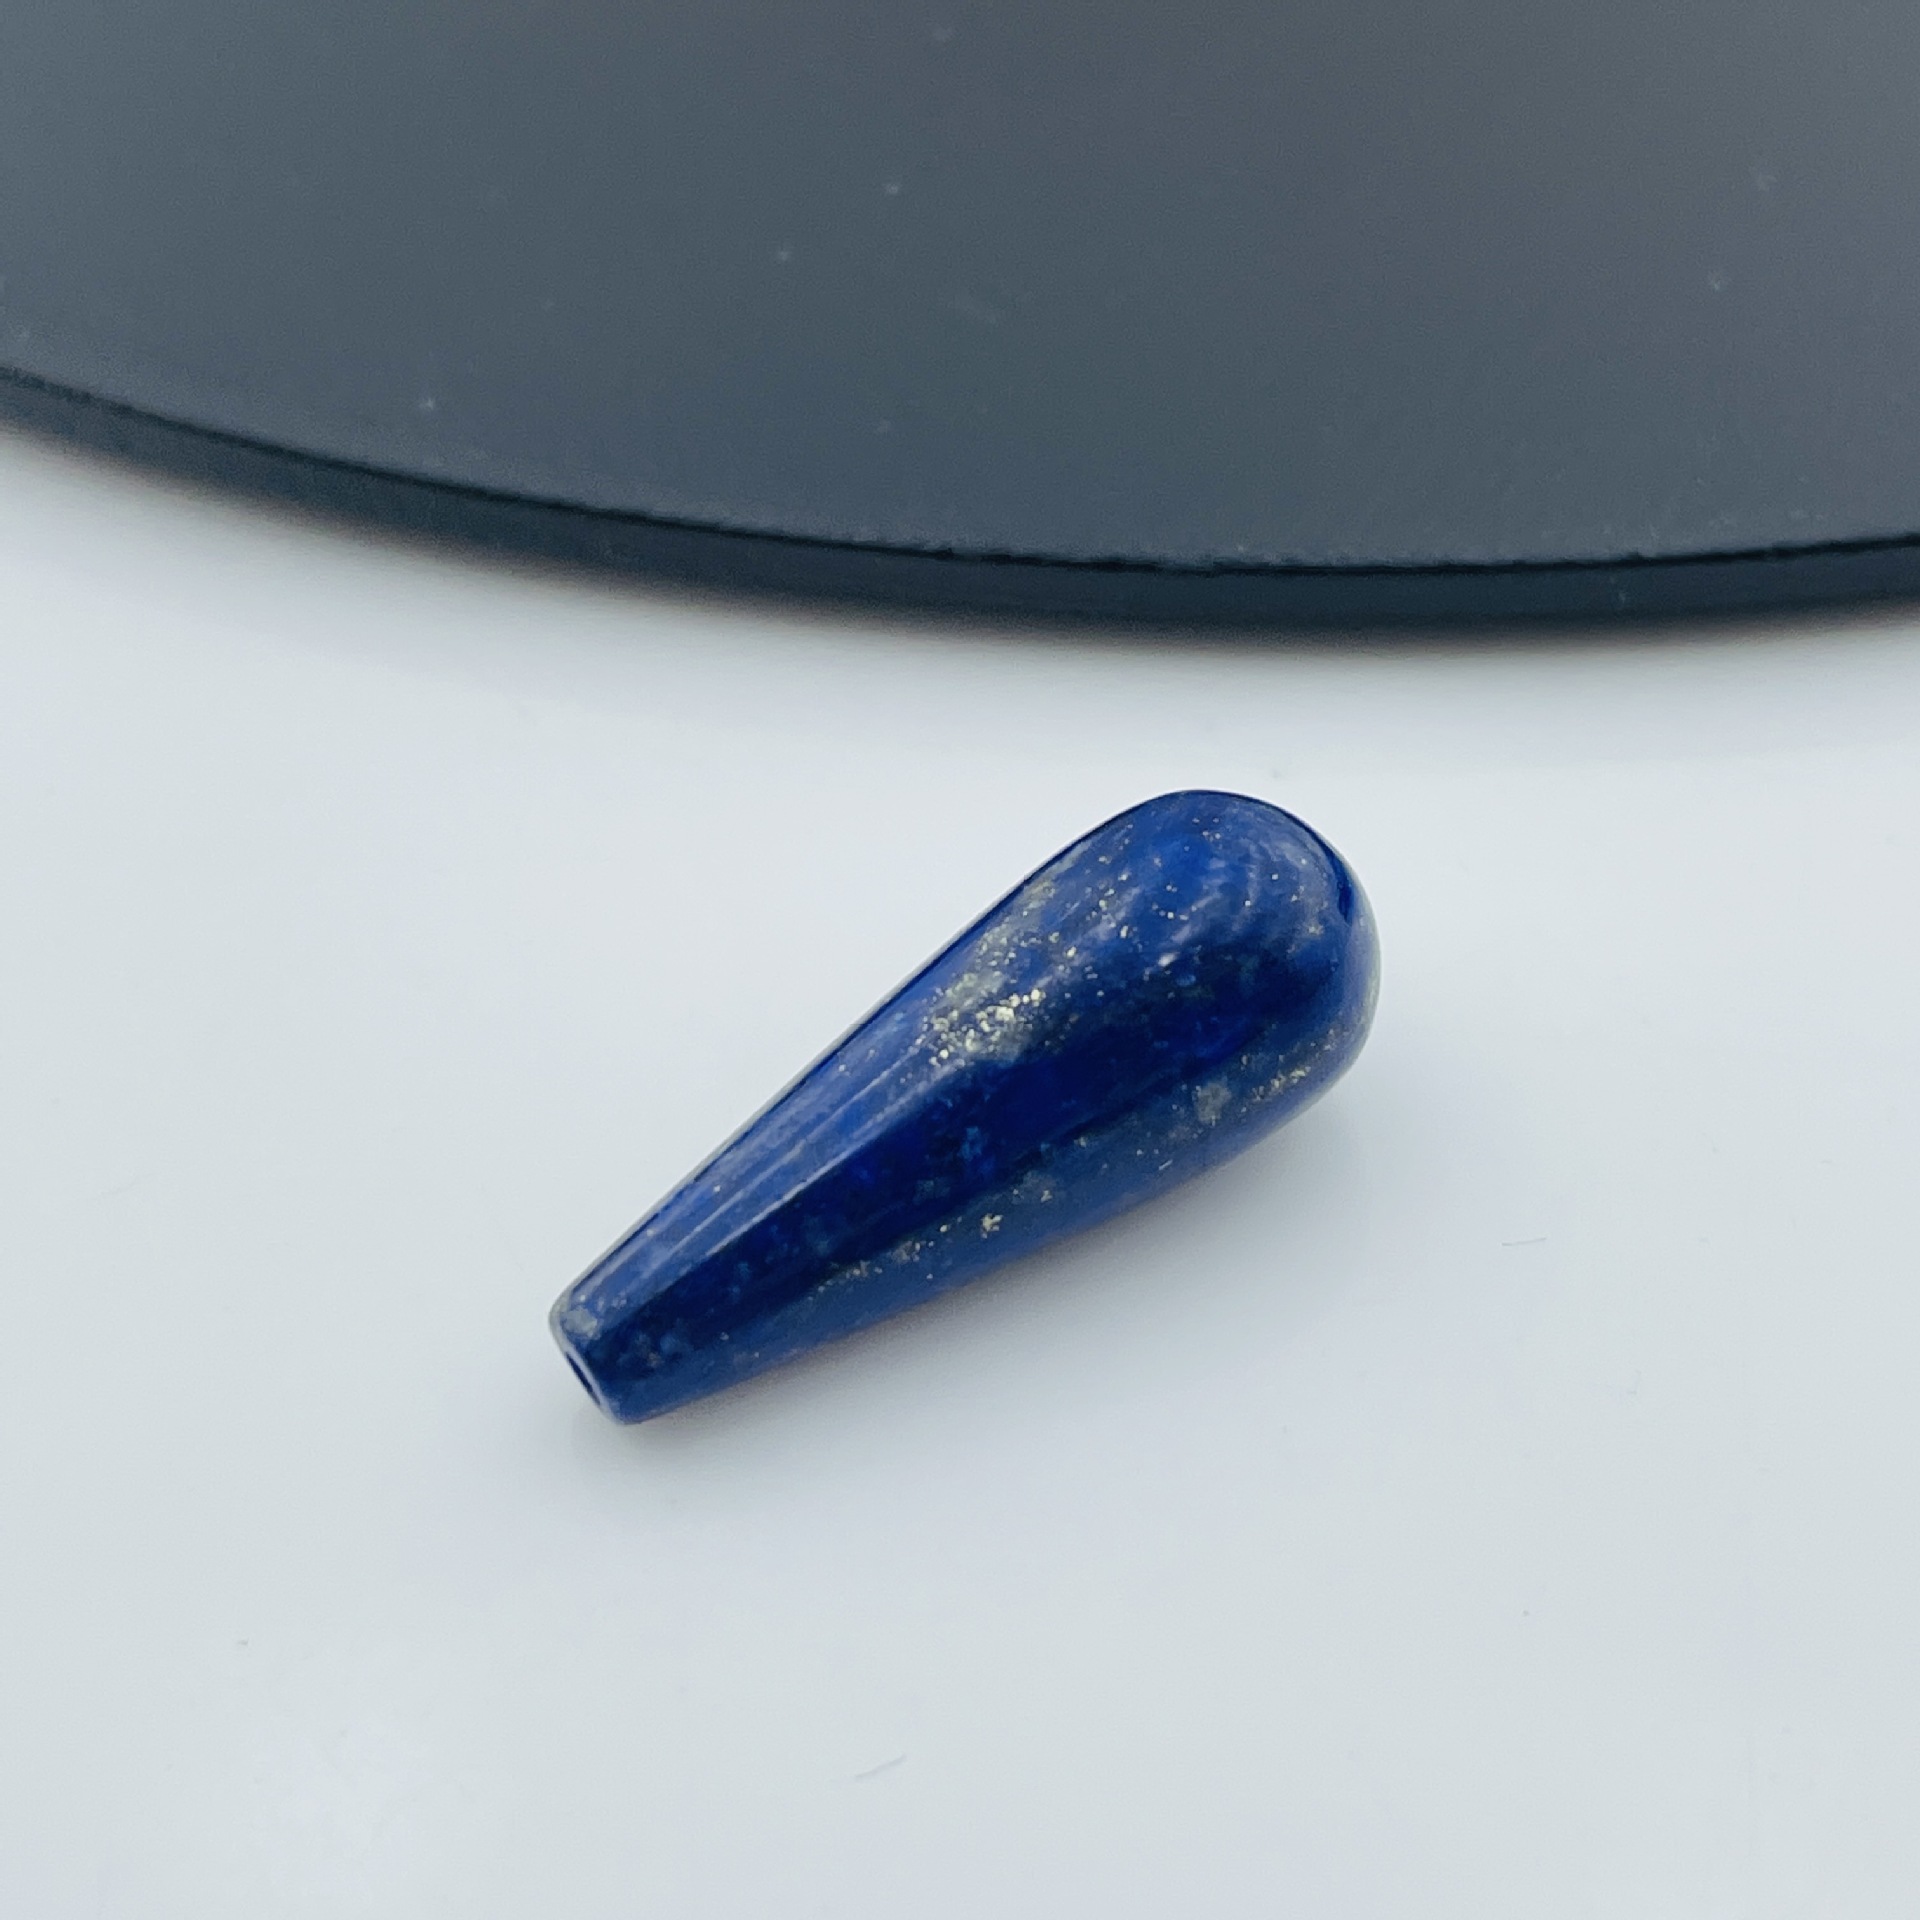 10 lapis lazuli